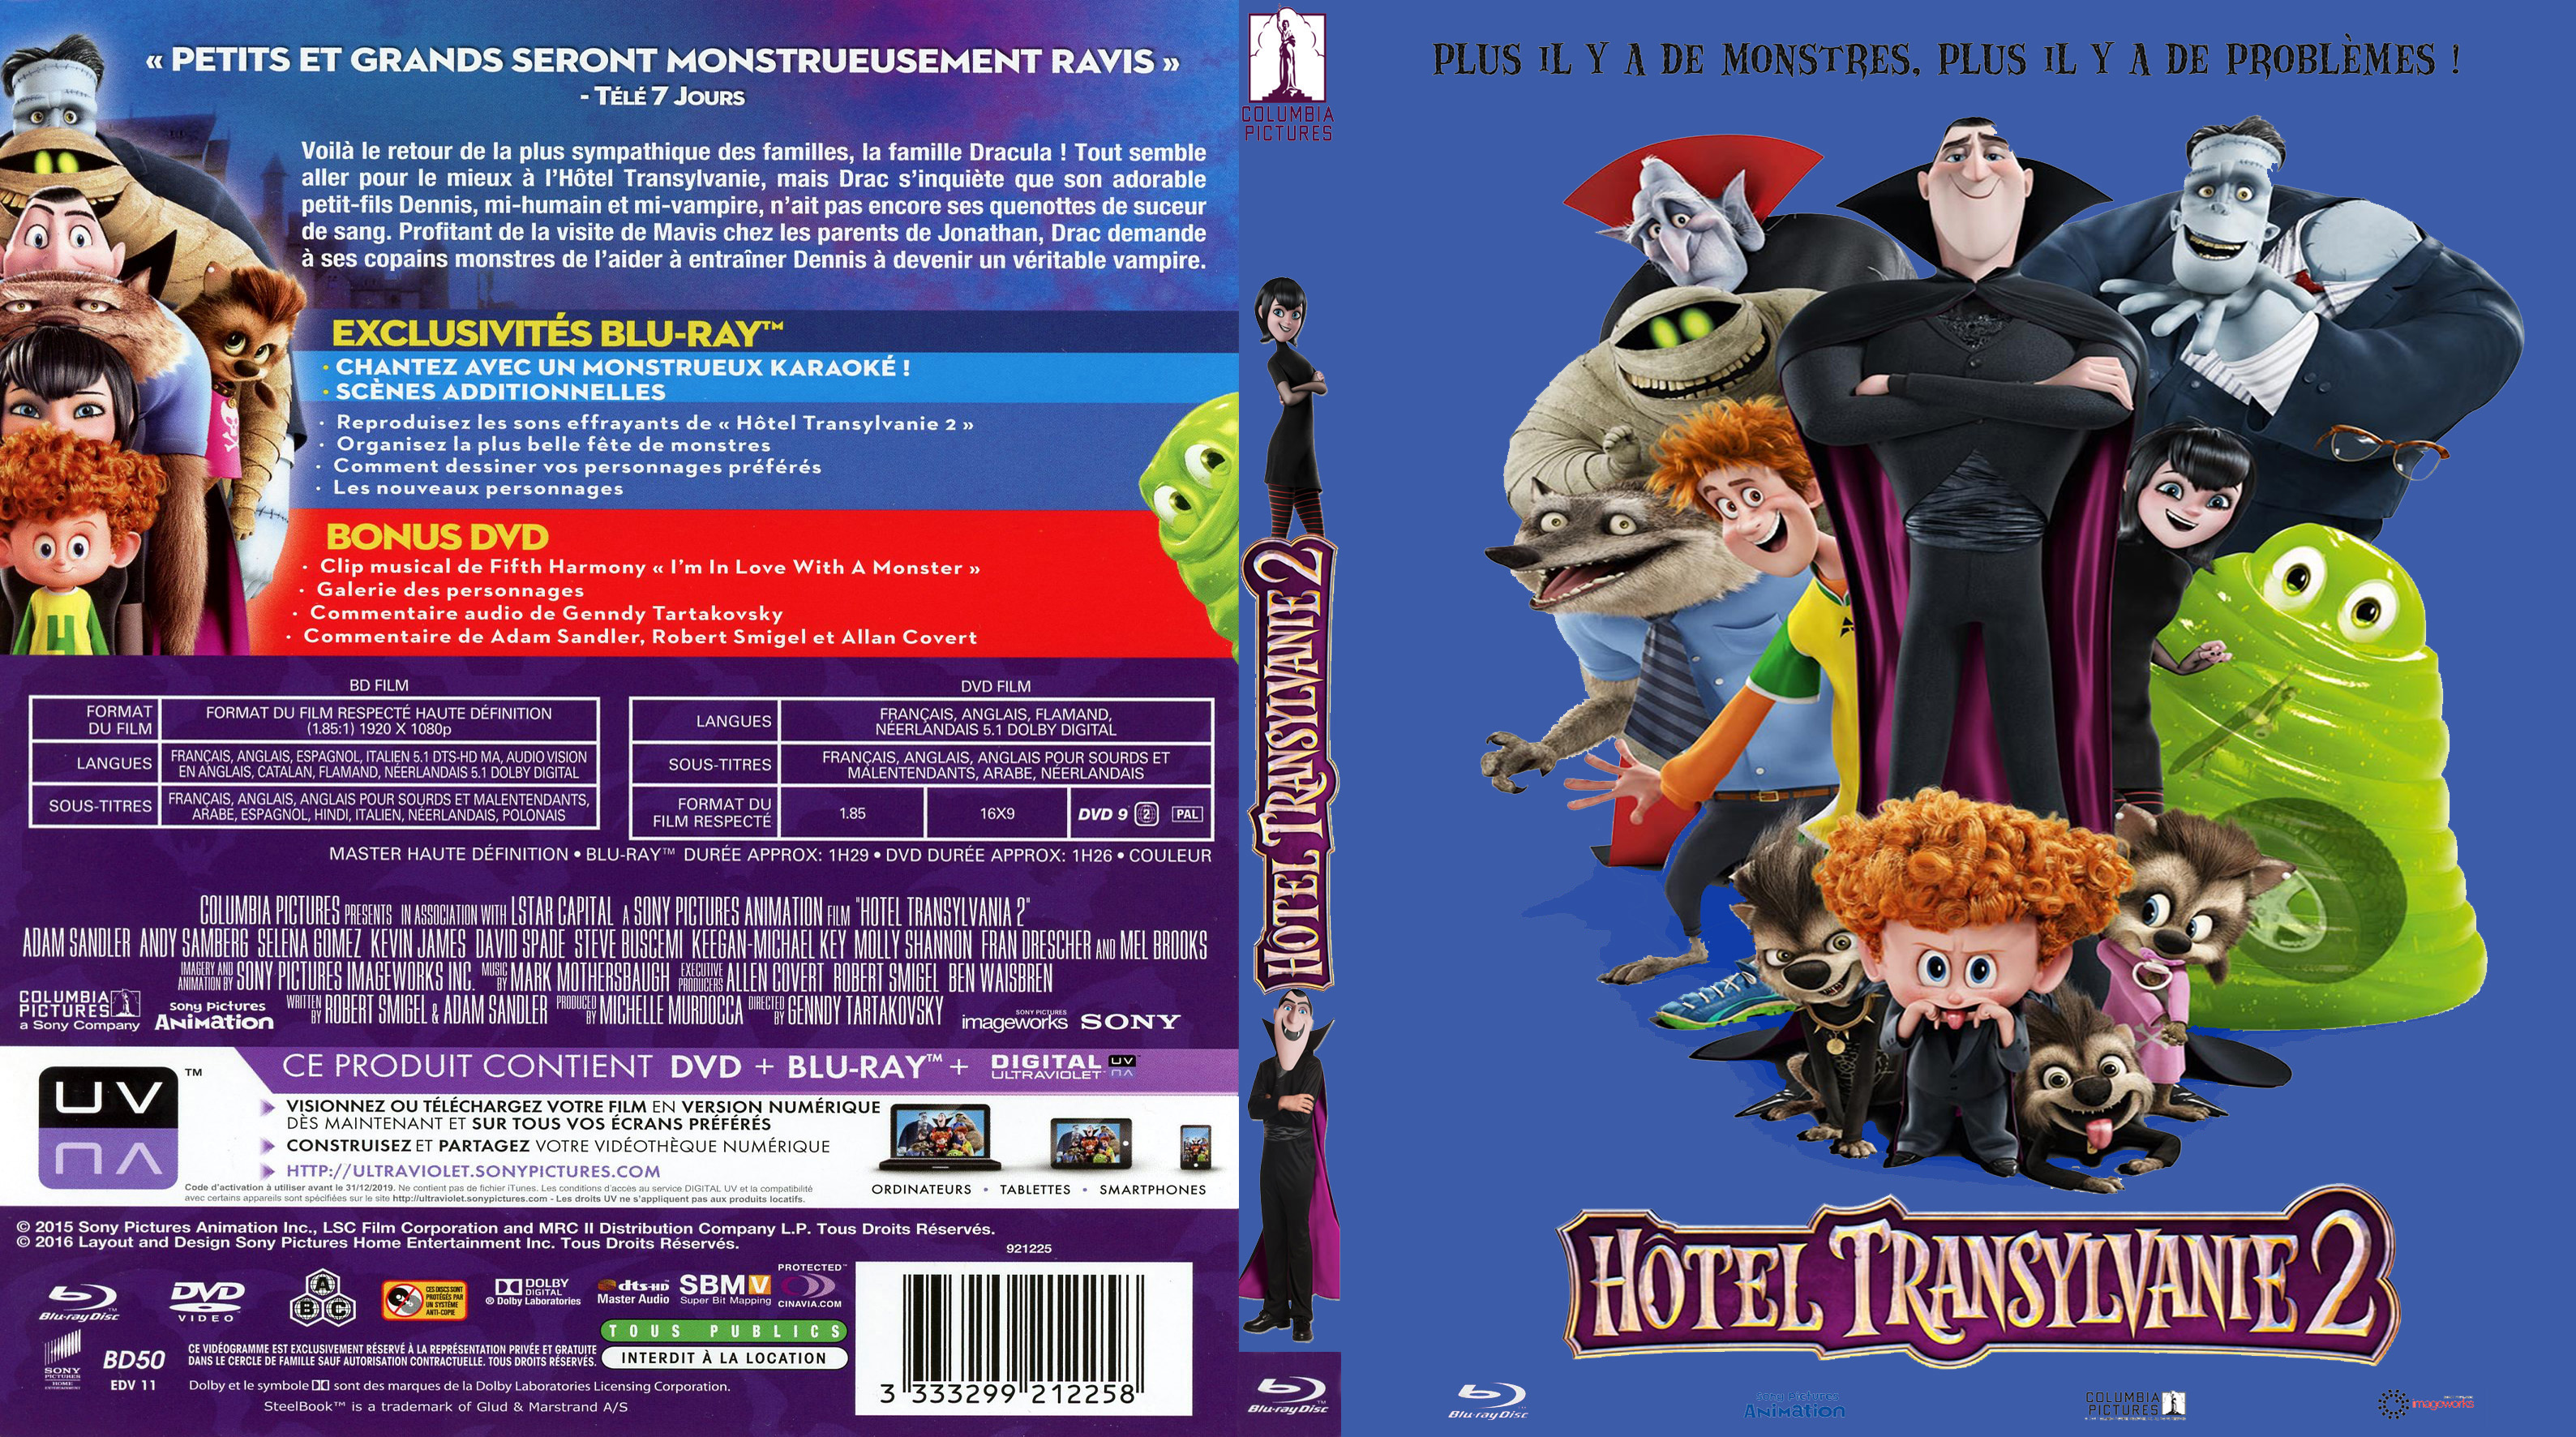 Jaquette DVD Hotel Transylvanie 2 (BLU-RAY) v3